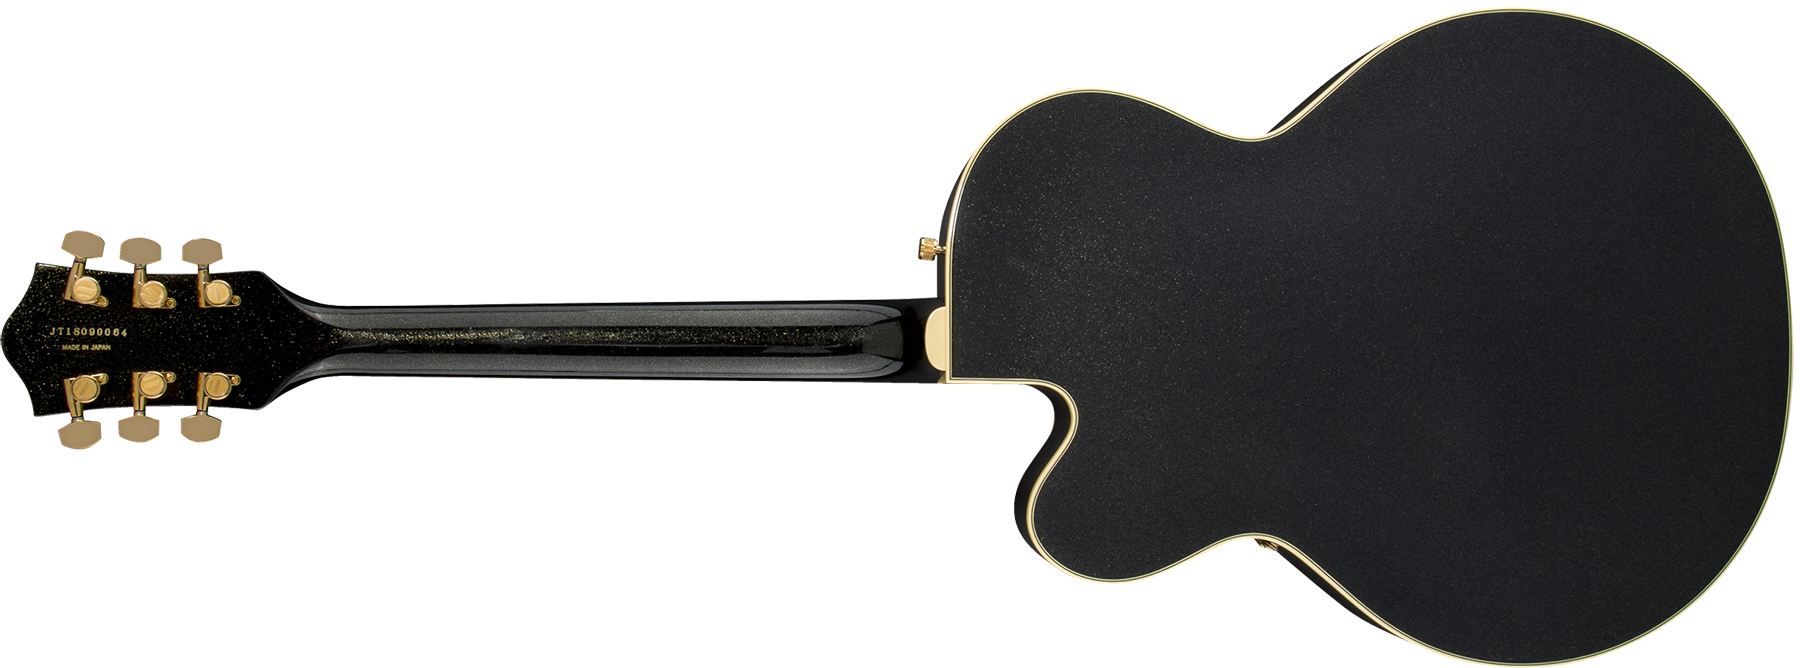 Gretsch Steve Wariner G6120t-sw Nashville Japon Signature Hh Bigsby Eb - Magic Black - Semi-hollow electric guitar - Variation 1